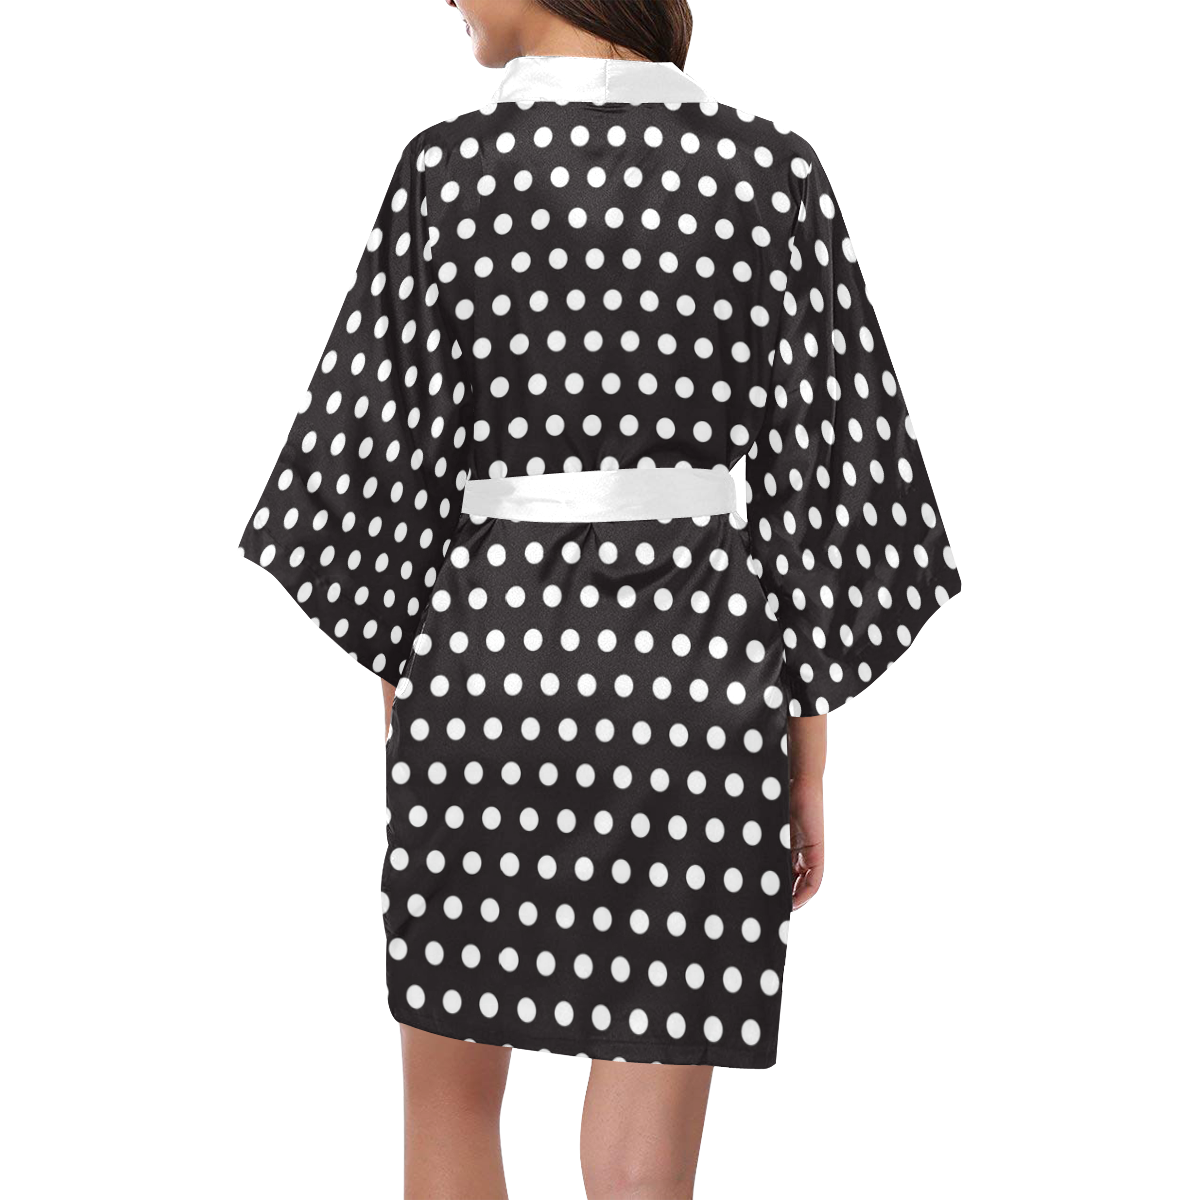 Just Dots Kimono Robe